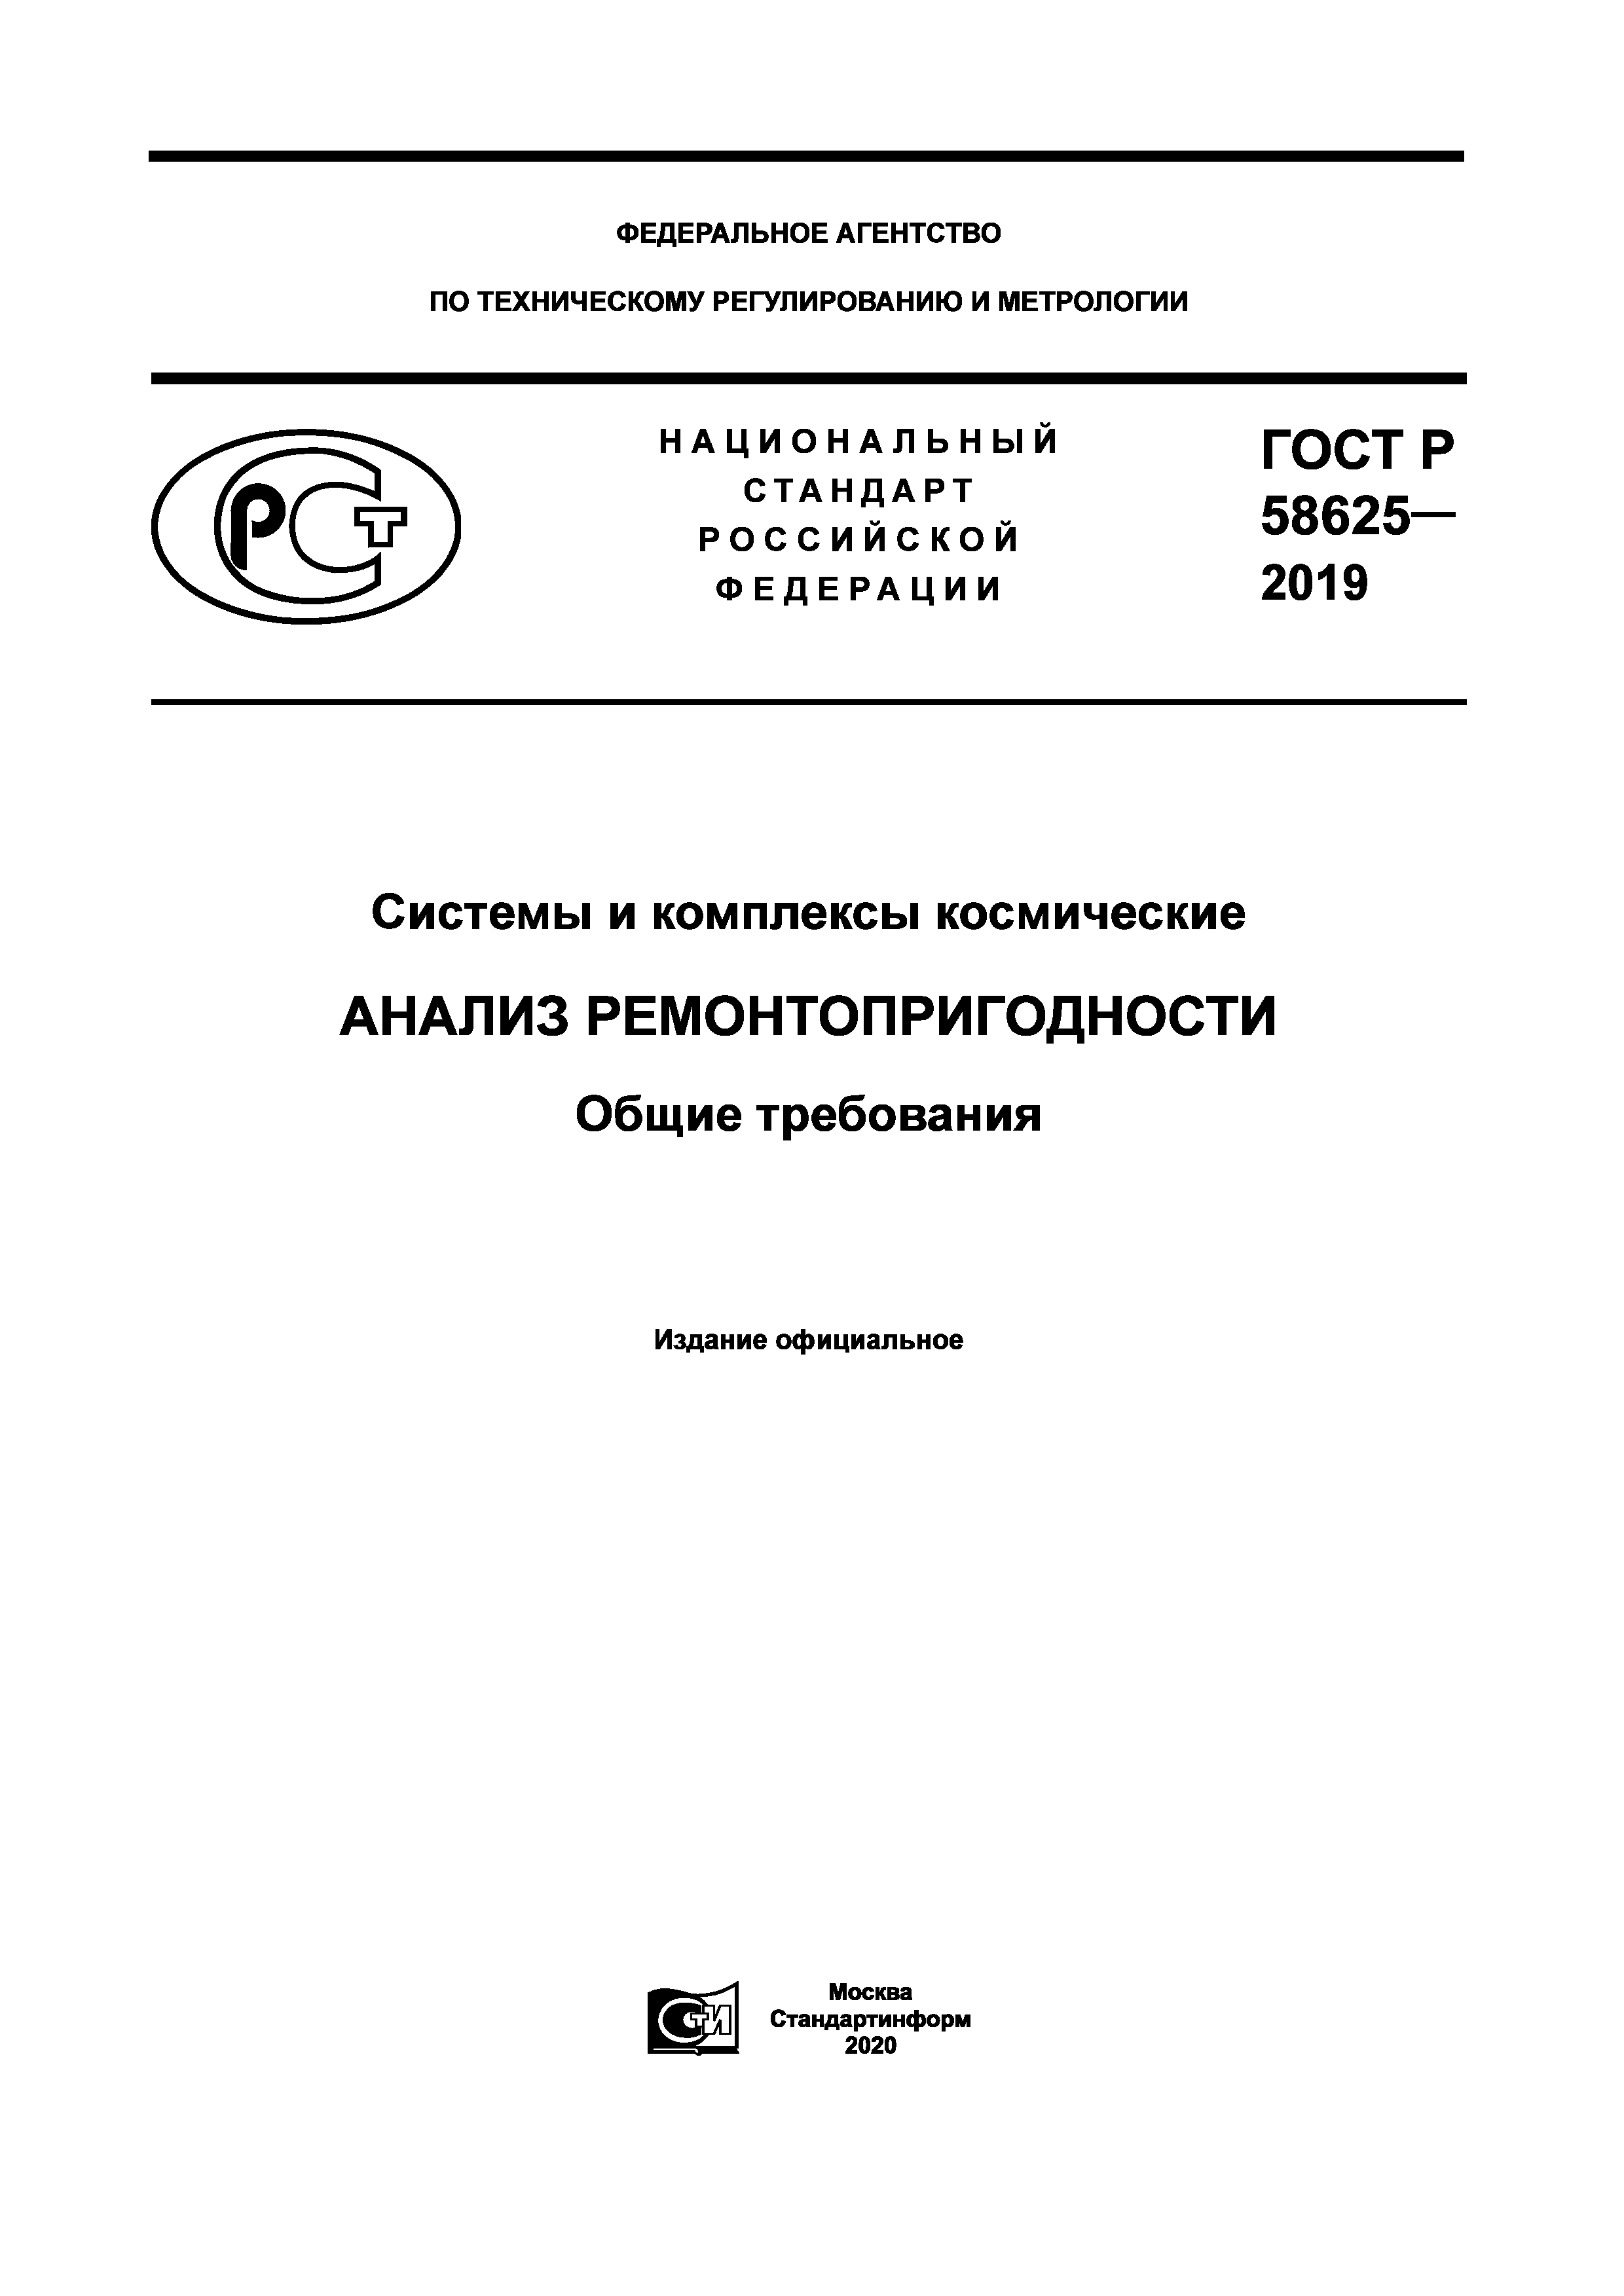 ГОСТ Р 58625-2019